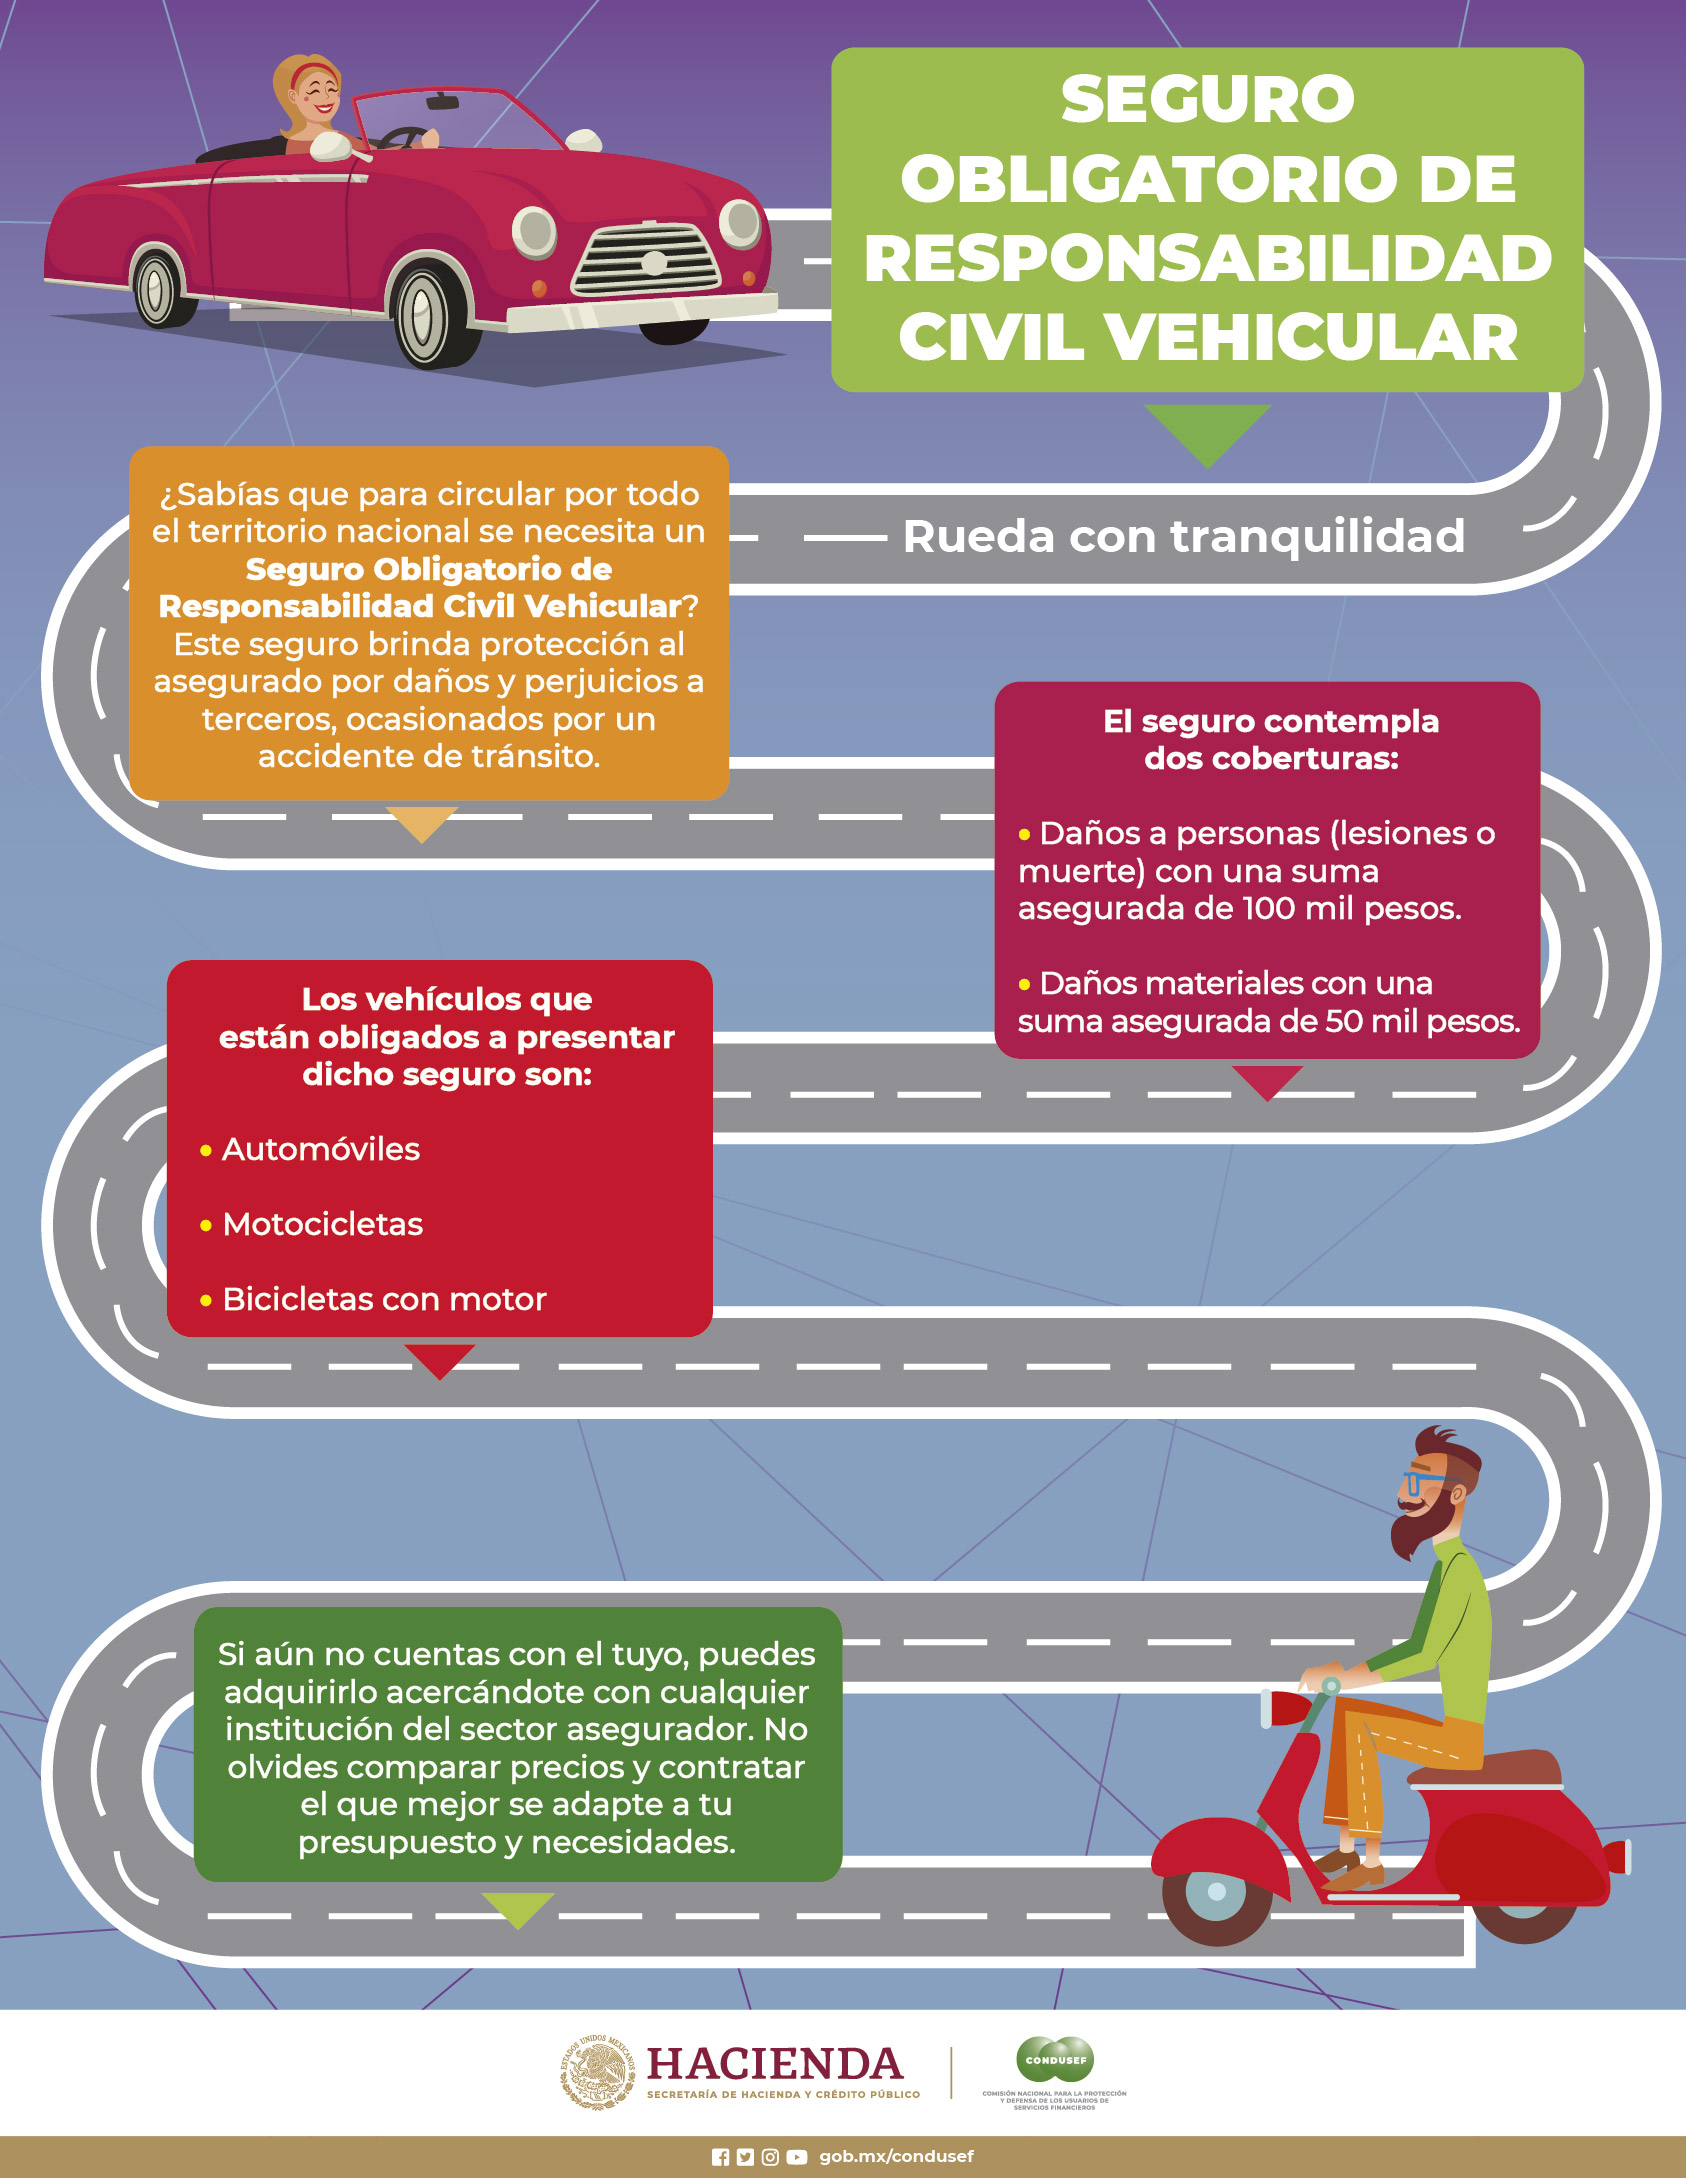 /cms/uploads/image/file/574518/Seguro_Obligatorio_de_Responsabilidad_Civil_Vehicular-01.jpg